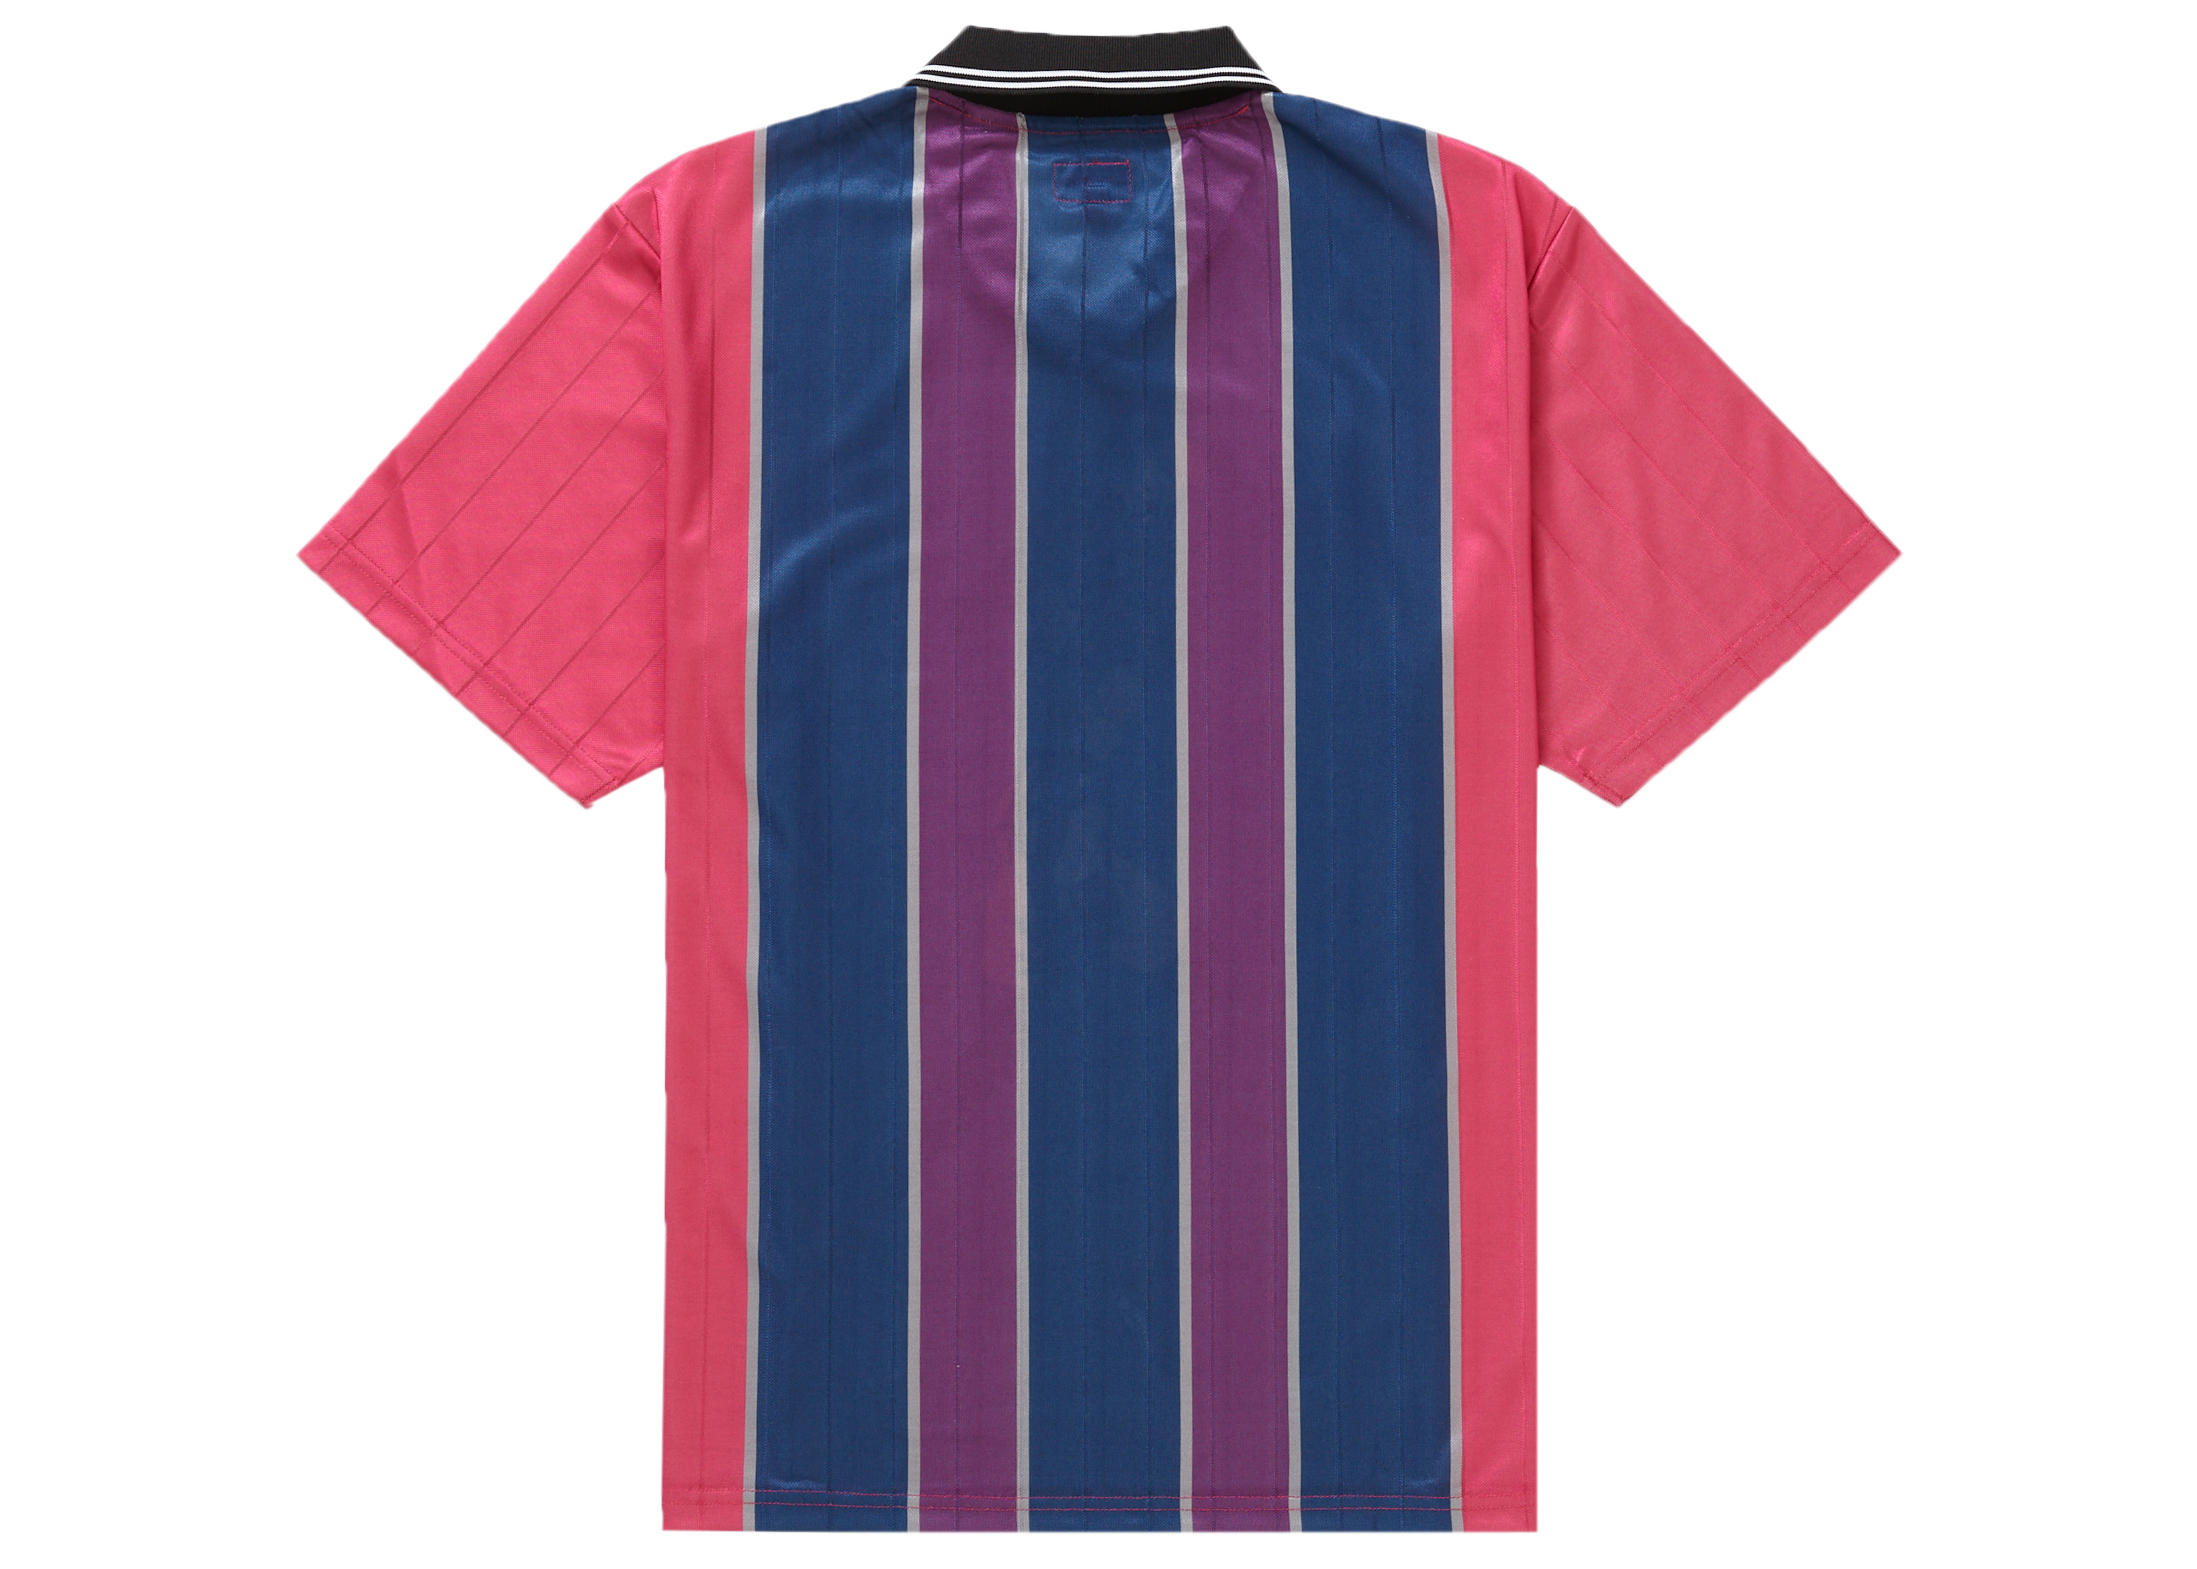 Supreme Aeon Flux Soccer Jersey Pink